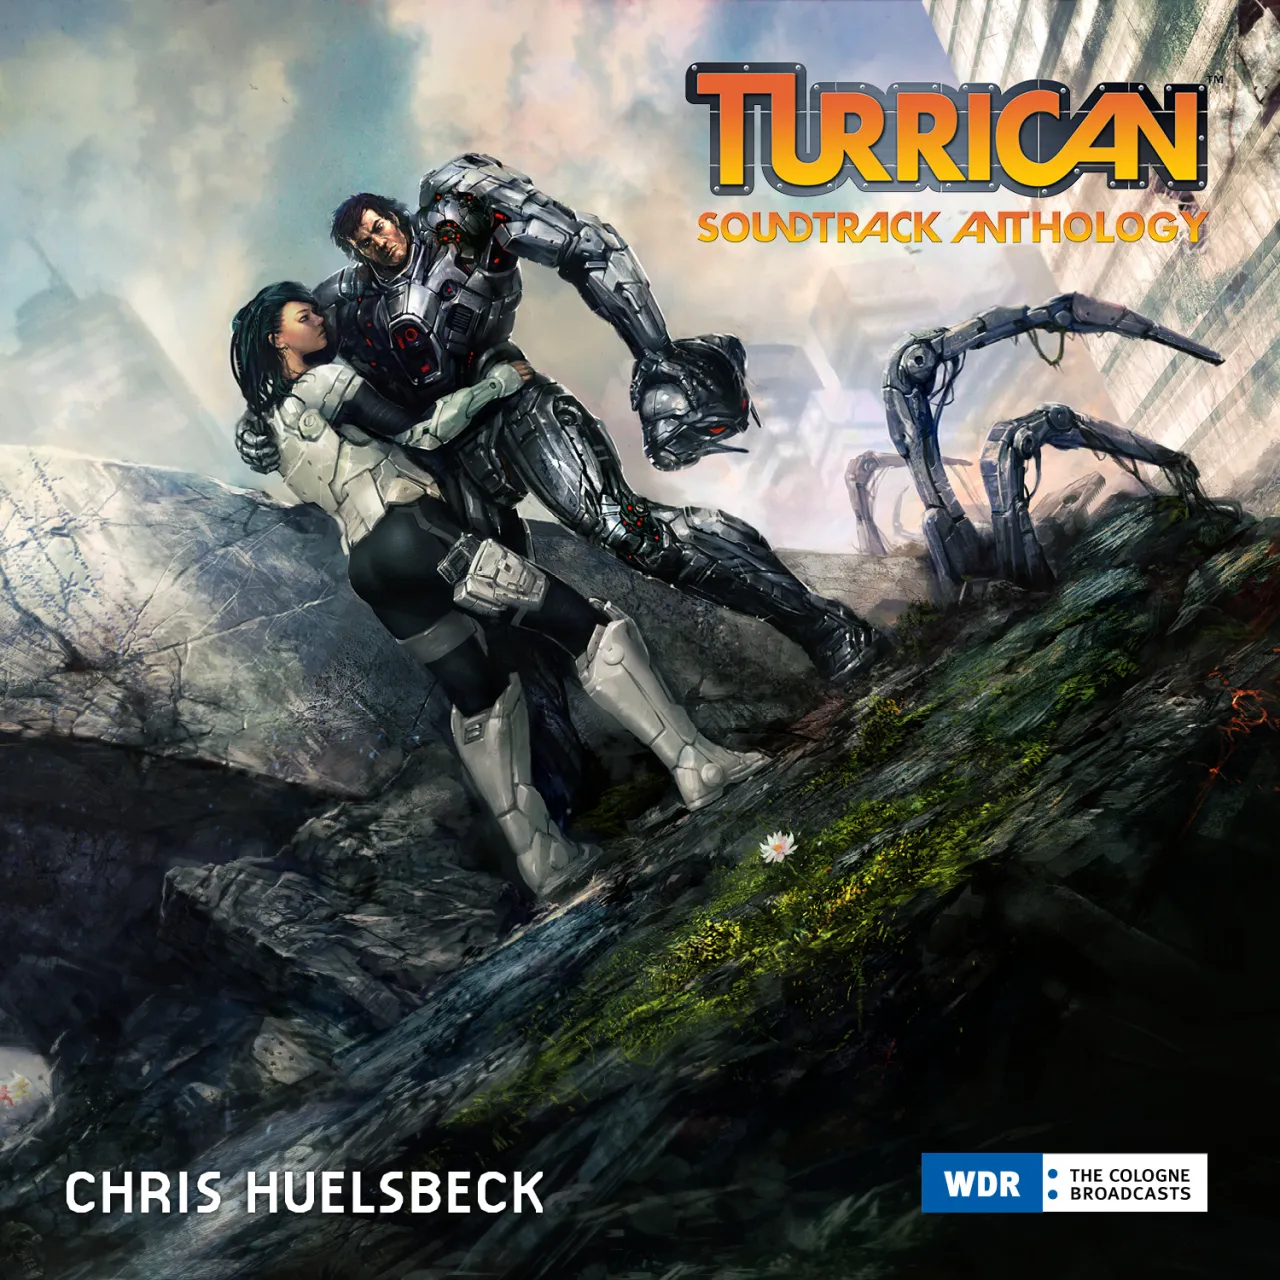 Turrican Soundtrack Anthology Vol. 4